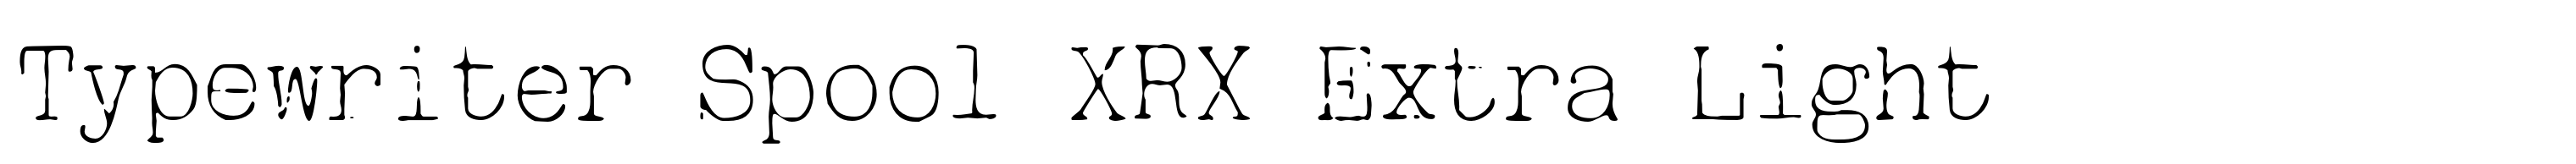 Typewriter Spool XRX Extra Light